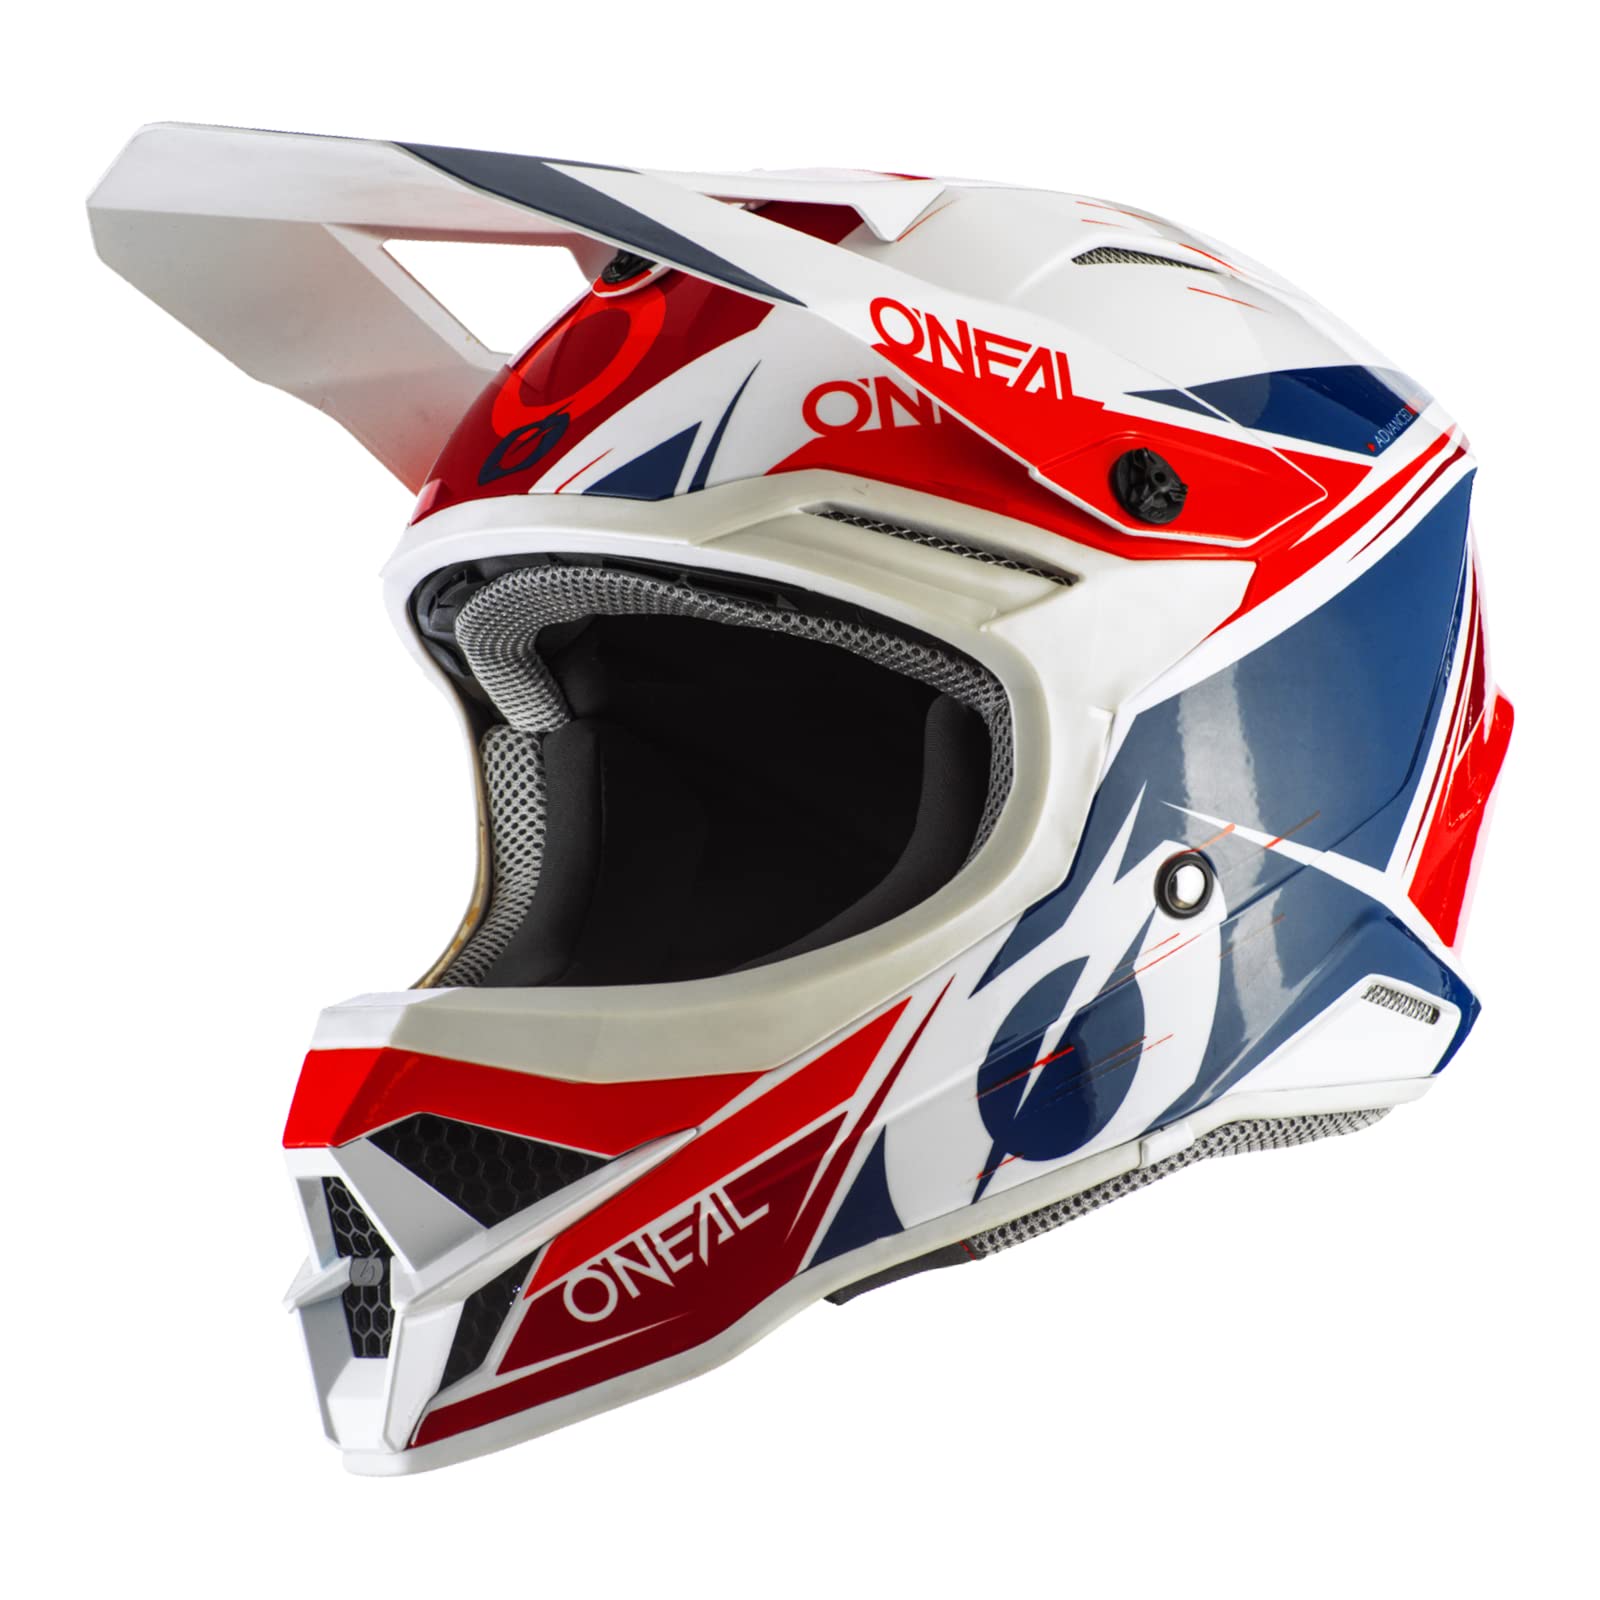 O'NEAL | Motocross-Helm | MX Enduro Motorrad | ABS-Schale, erfüllt , Airflaps™ kompatibel | 3SRS Helmet Stardust | Erwachsene | Weiß Blau Rot | Größe S